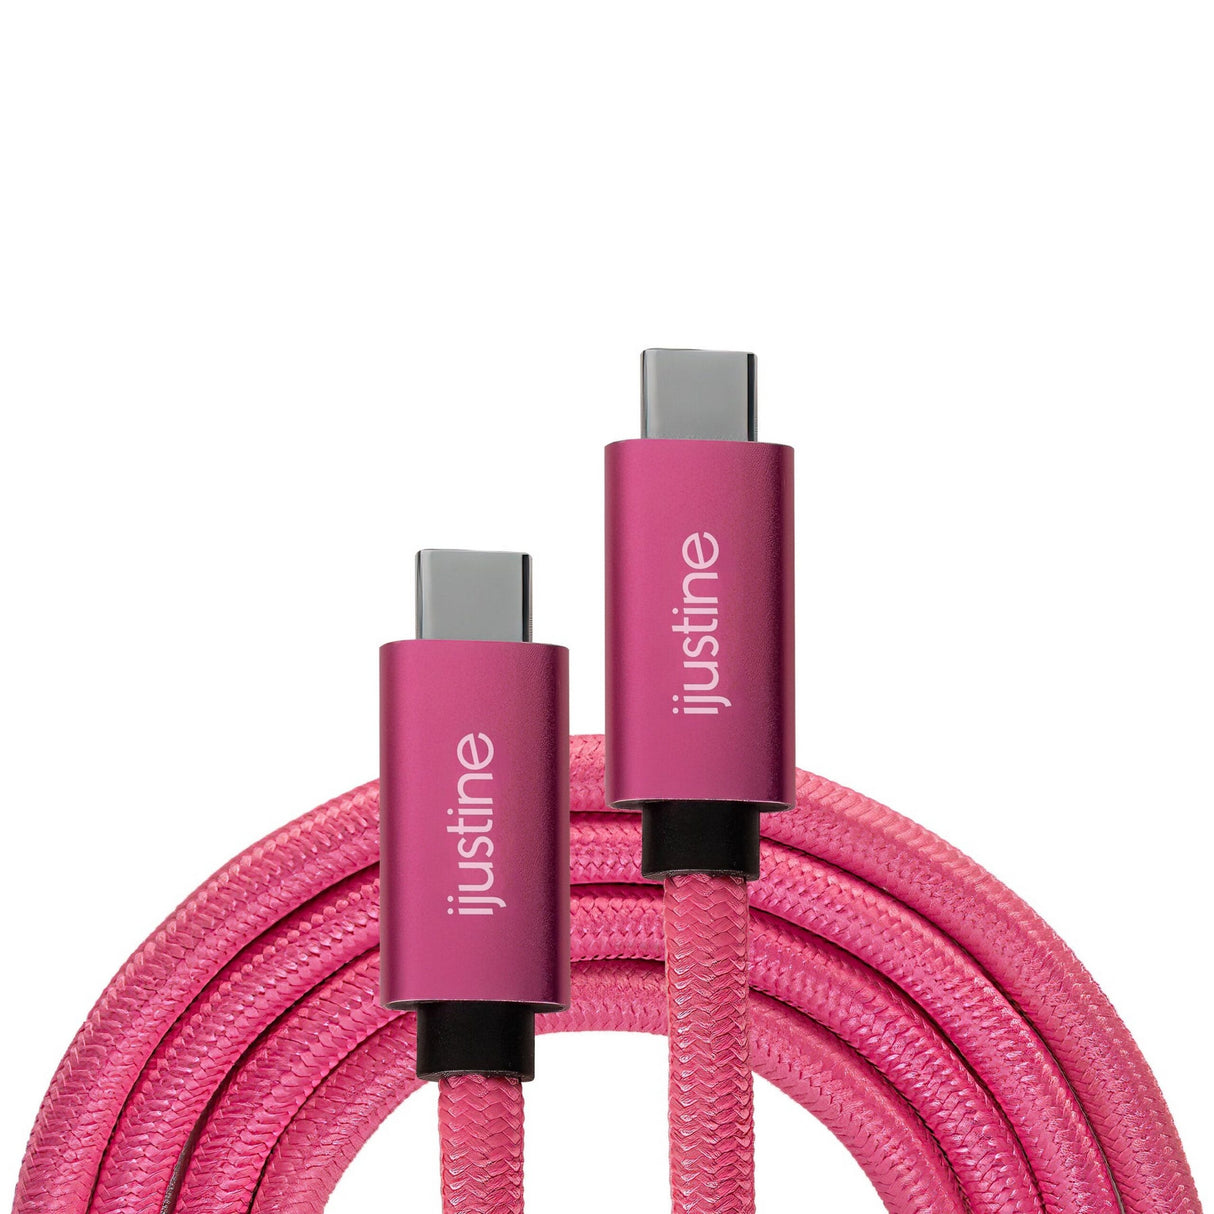 Kondor Blue KB-USB4C-3-J iJustine Pink Thunderbolt 4 USB 4.0 Type C 8K Cable